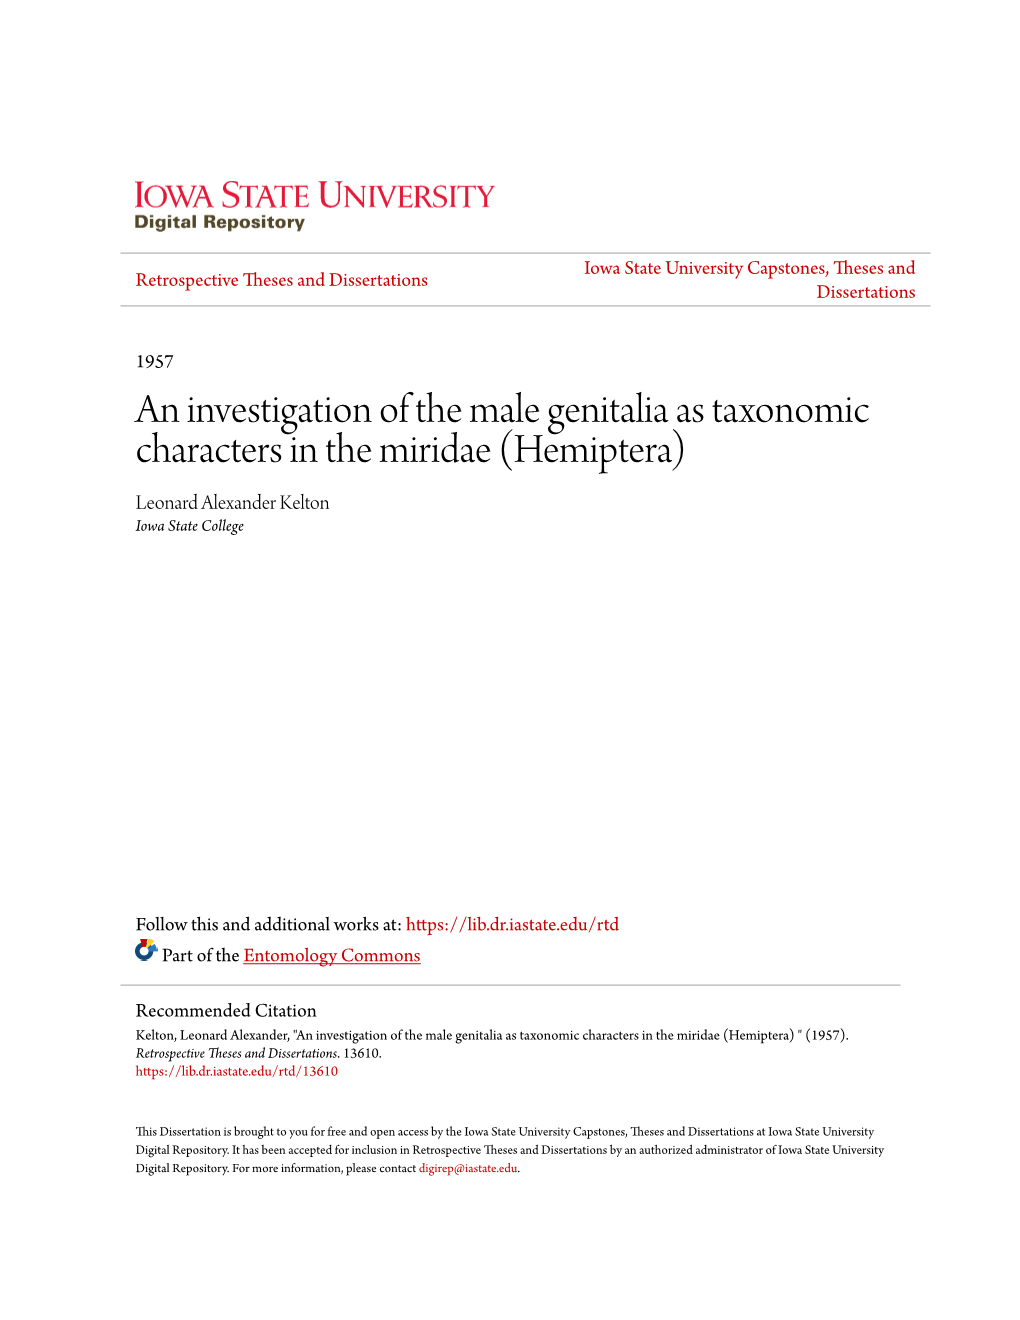 An Investigation of the Male Genitalia As Taxonomic Characters in the Miridae (Hemiptera) Leonard Alexander Kelton Iowa State College